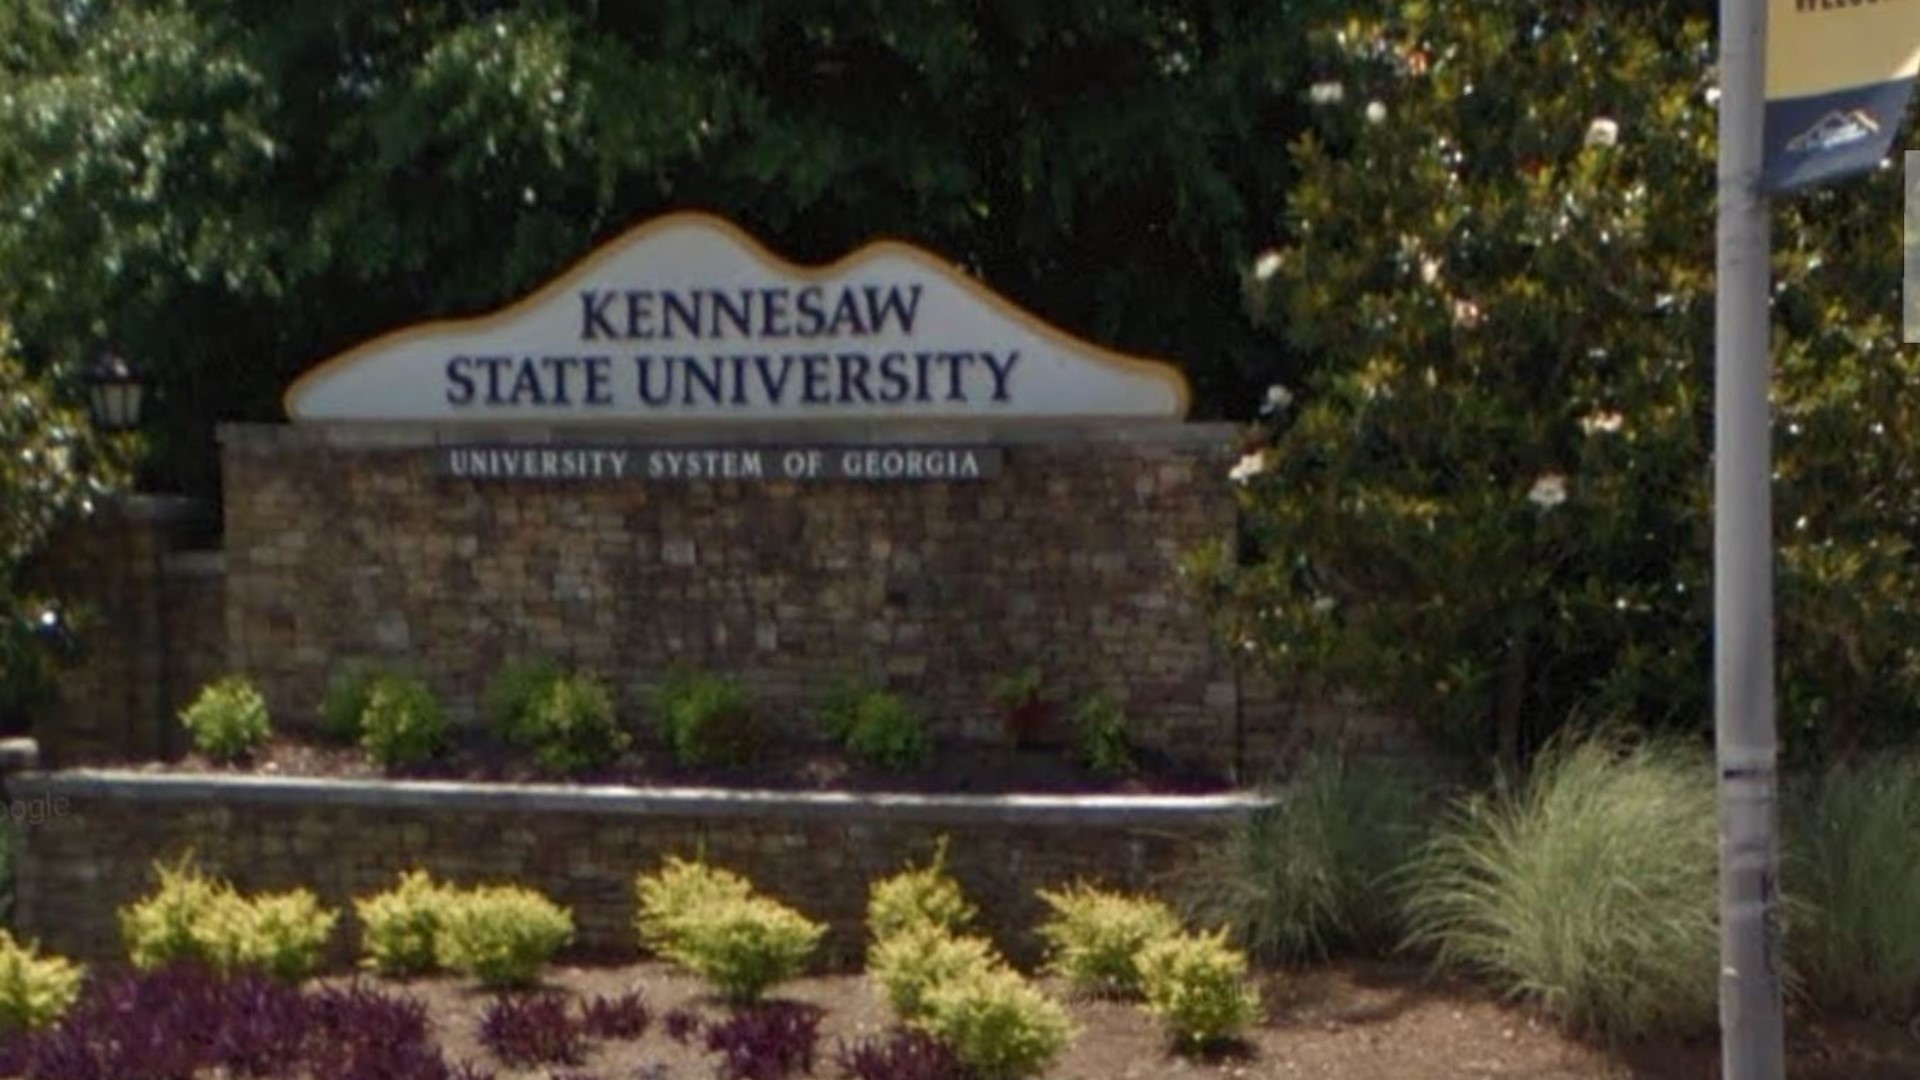 Kennesaw State says no threat on campus despite Twitter uproar